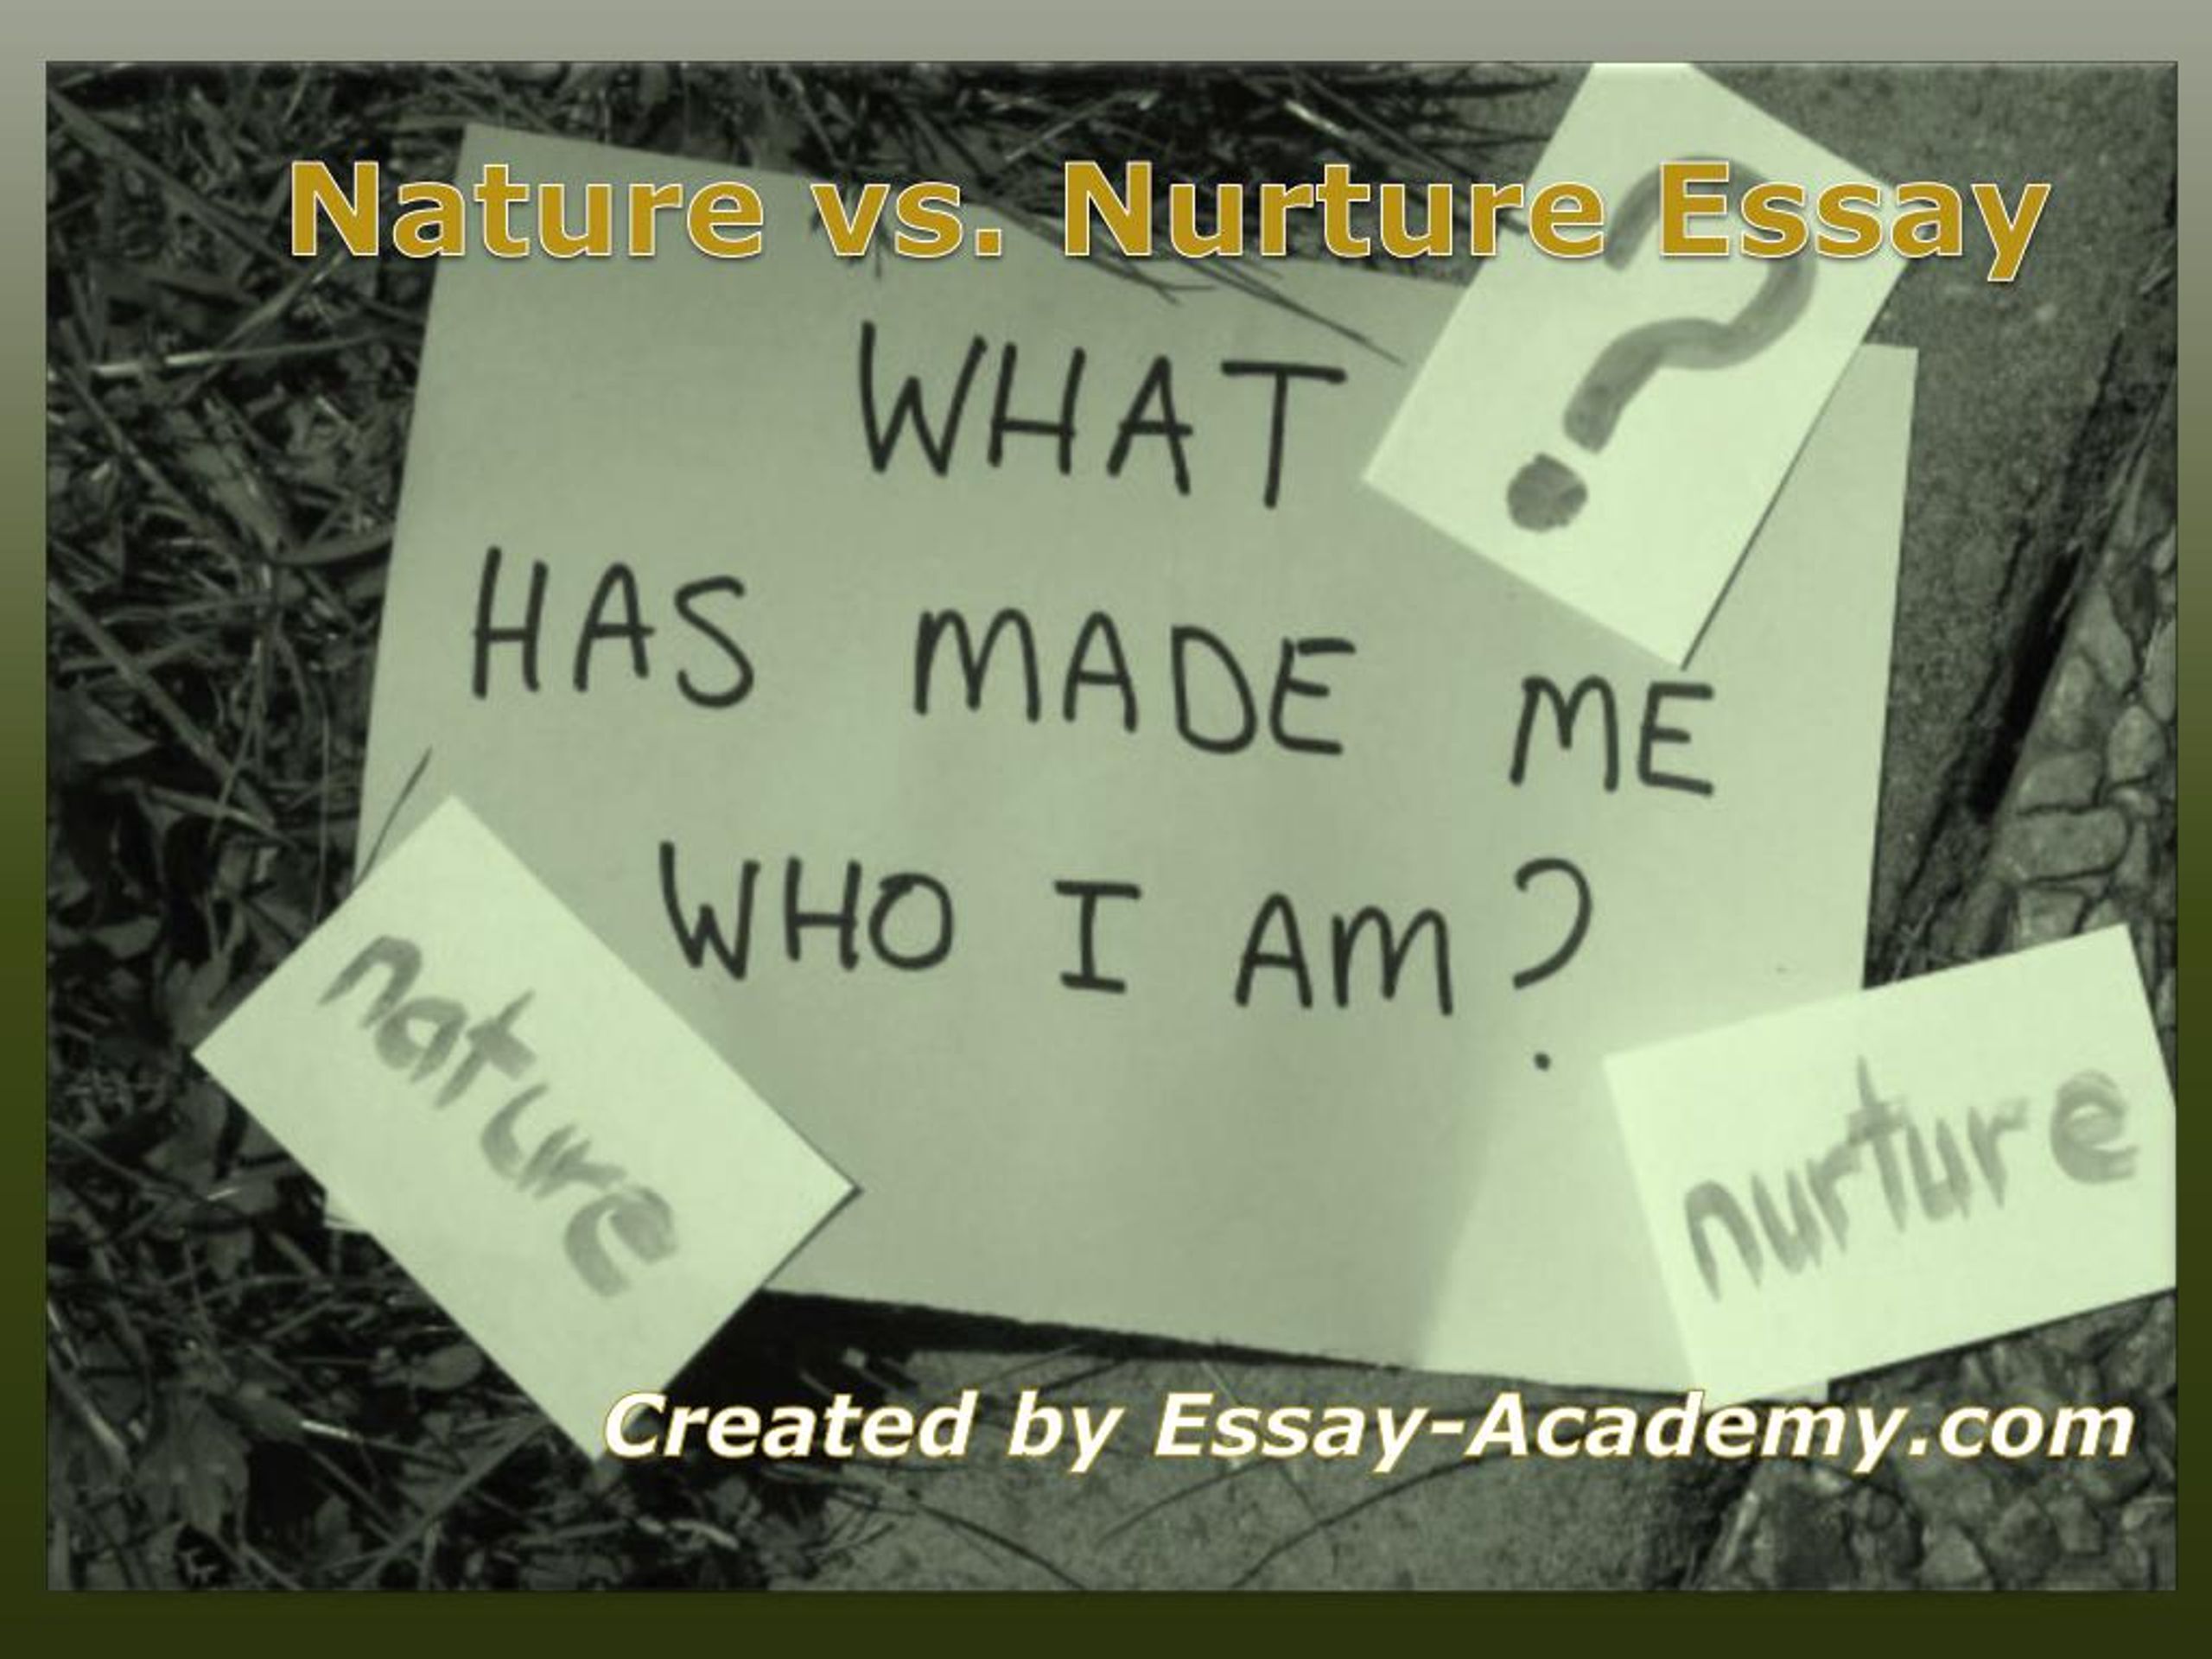 who invented nature vs nurture